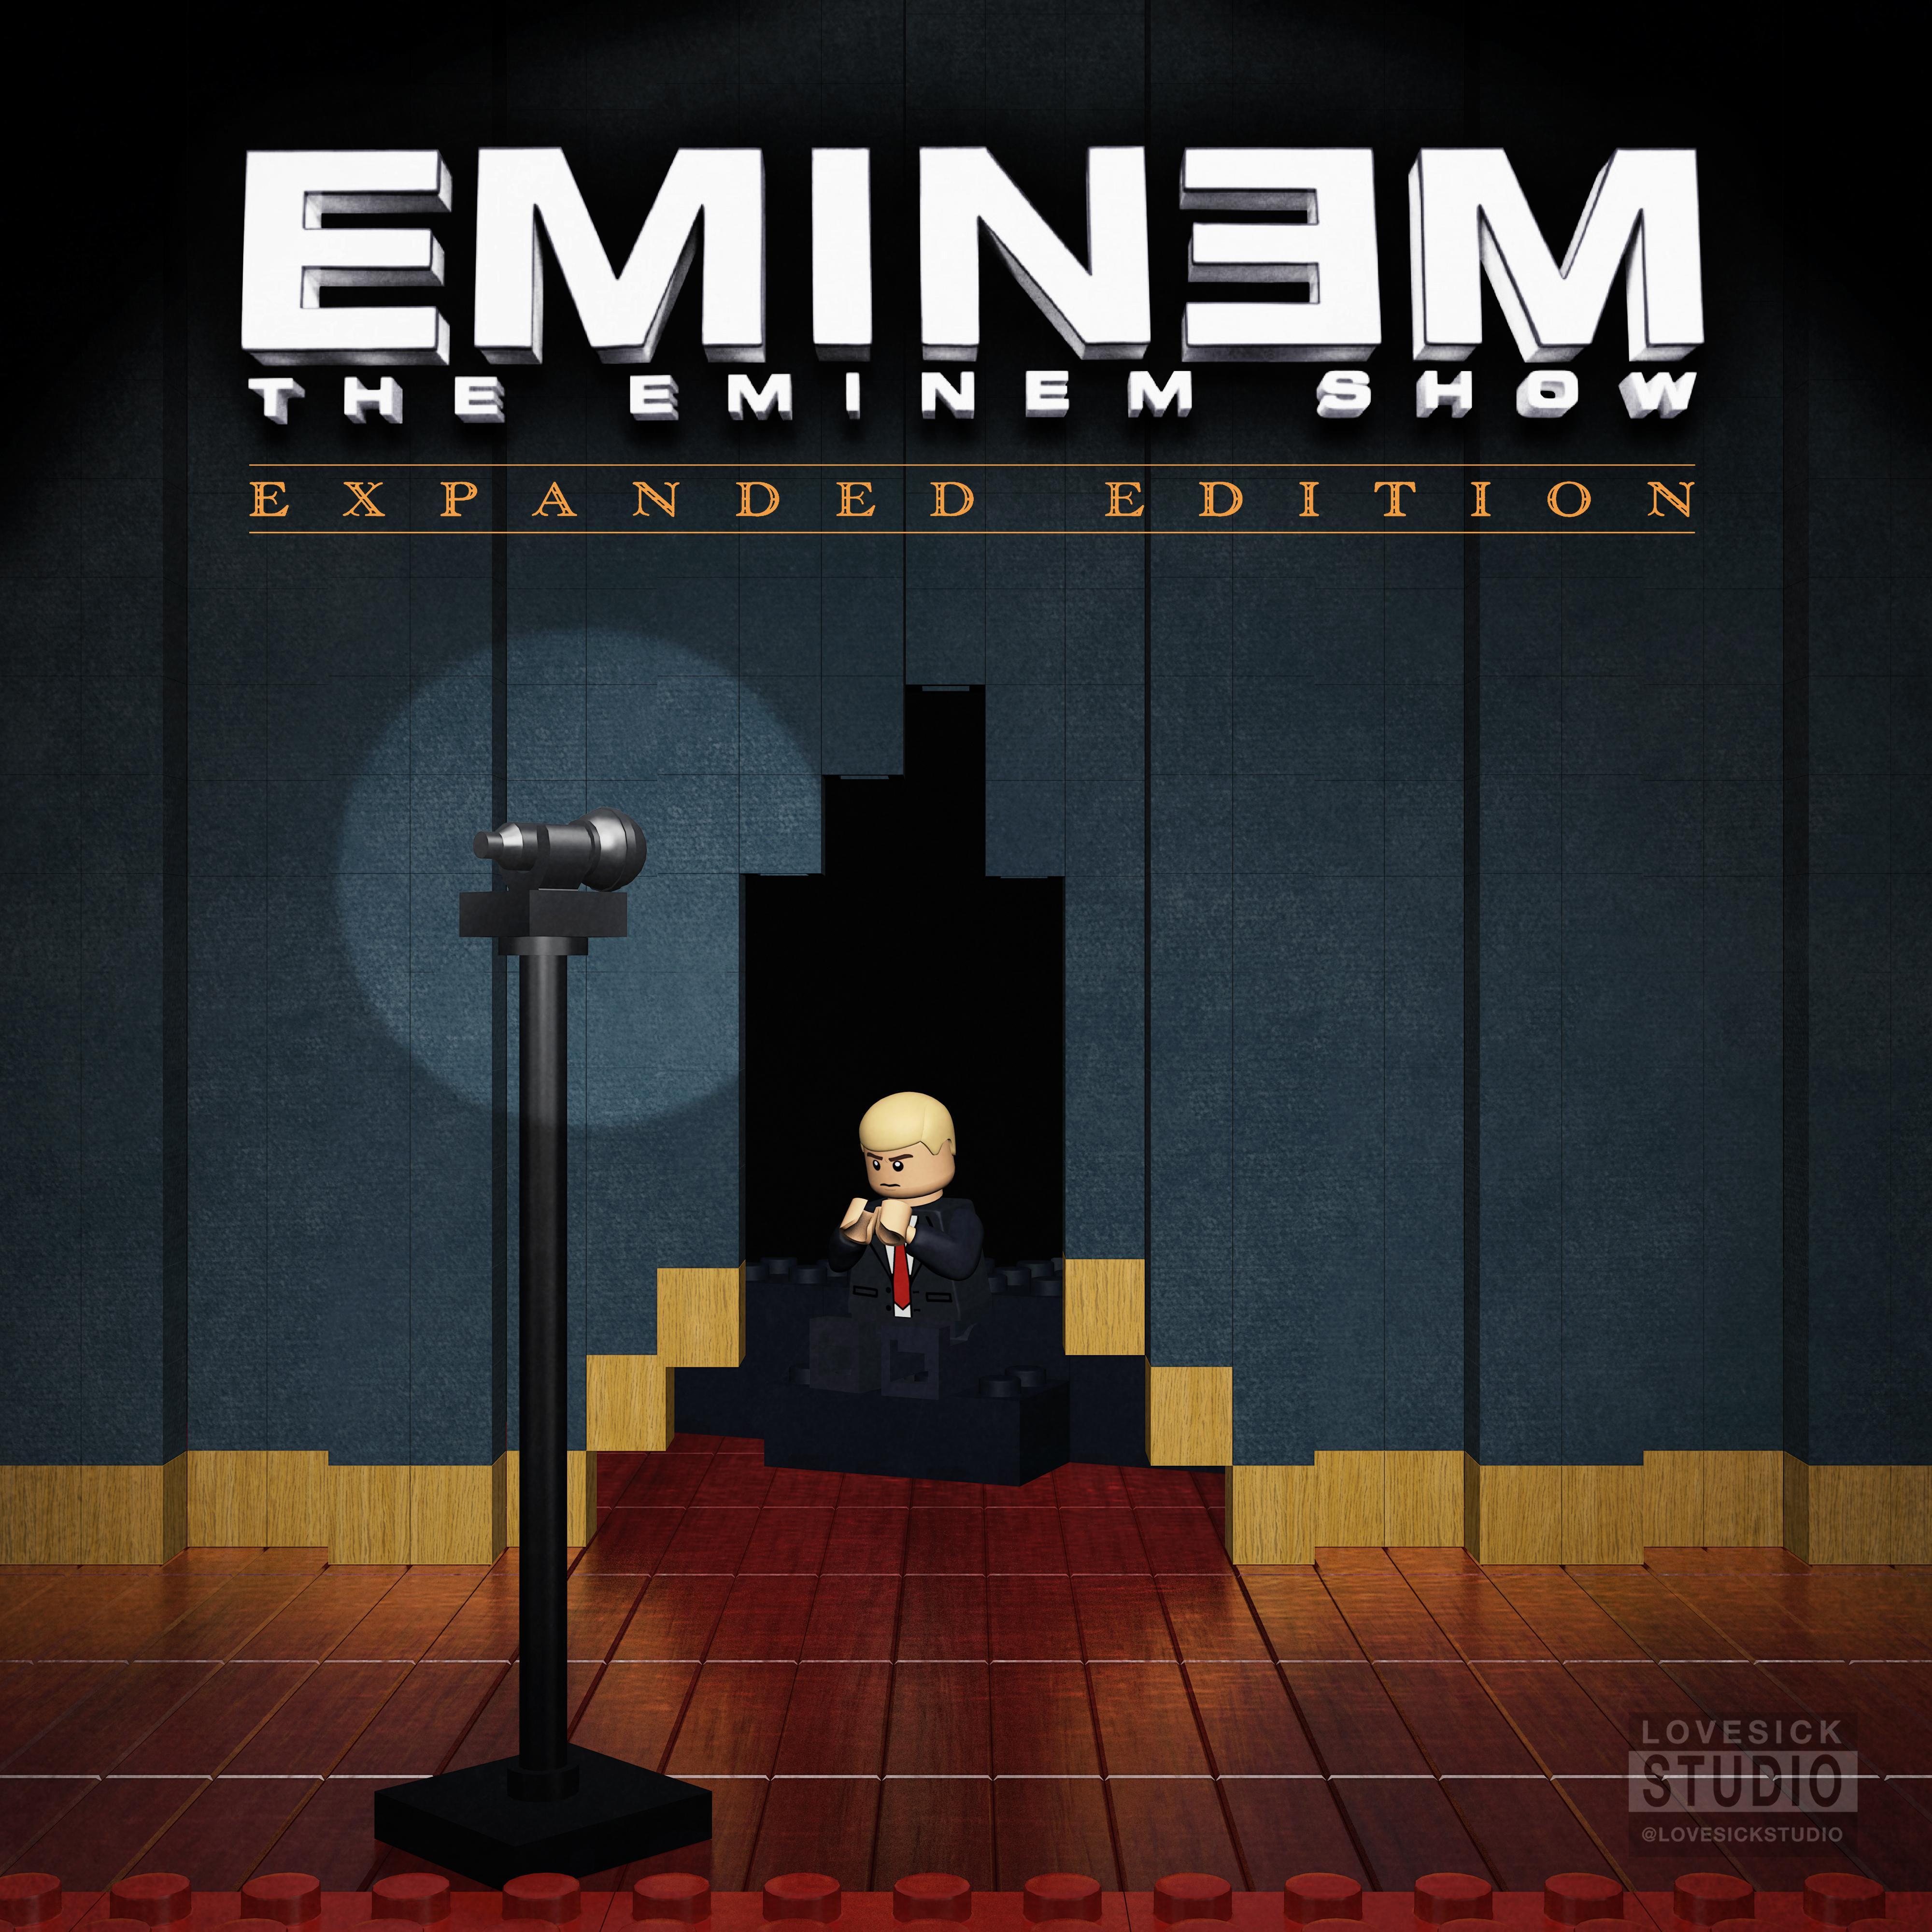 Eminem The Show Expanded Edition Lego Album Art Remake